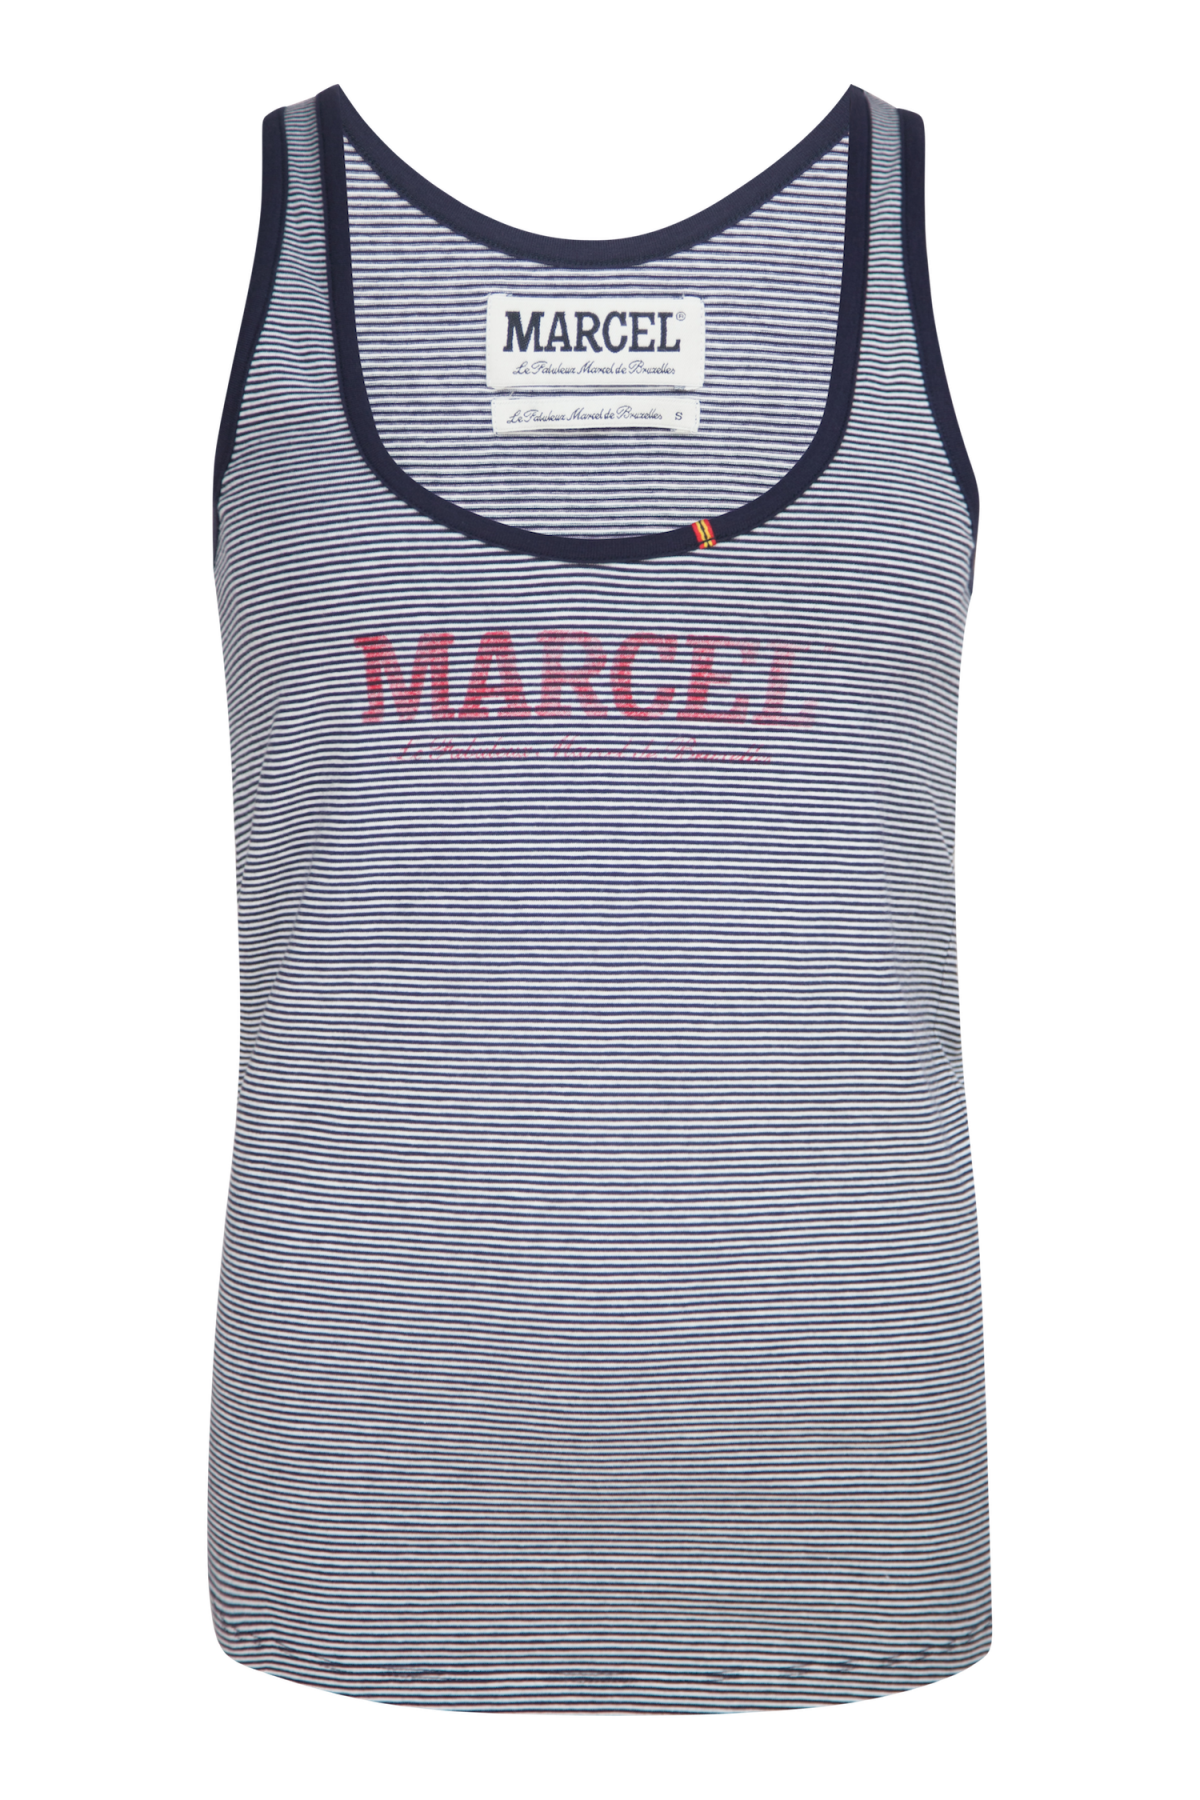 Marcel, €29.99